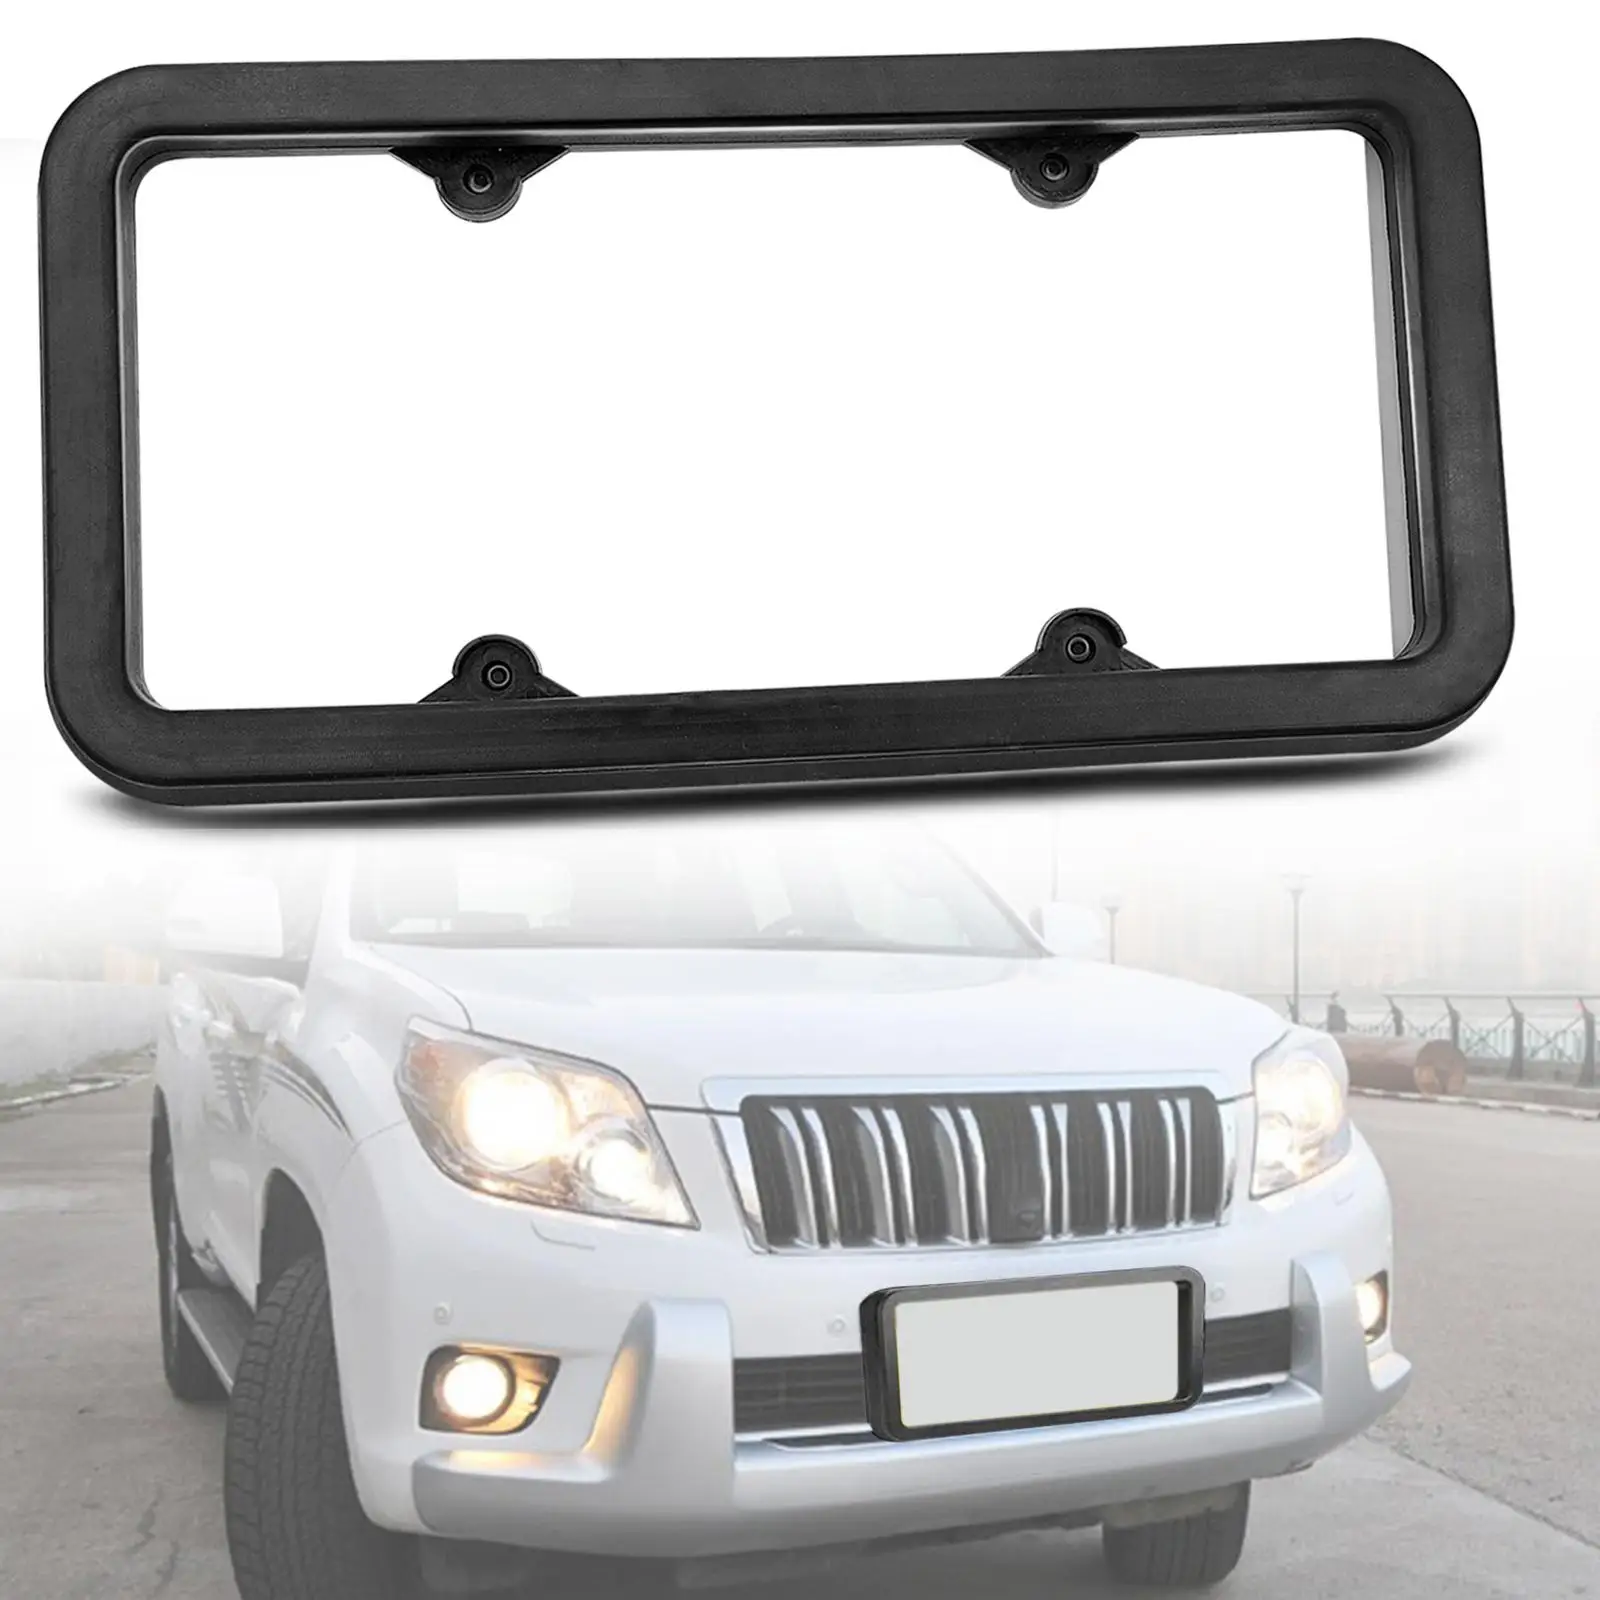 License Plate Bumper Rubber Guard Heavy Duty Universal Easy Installation License Plates Frame Protector for Suvs Trucks